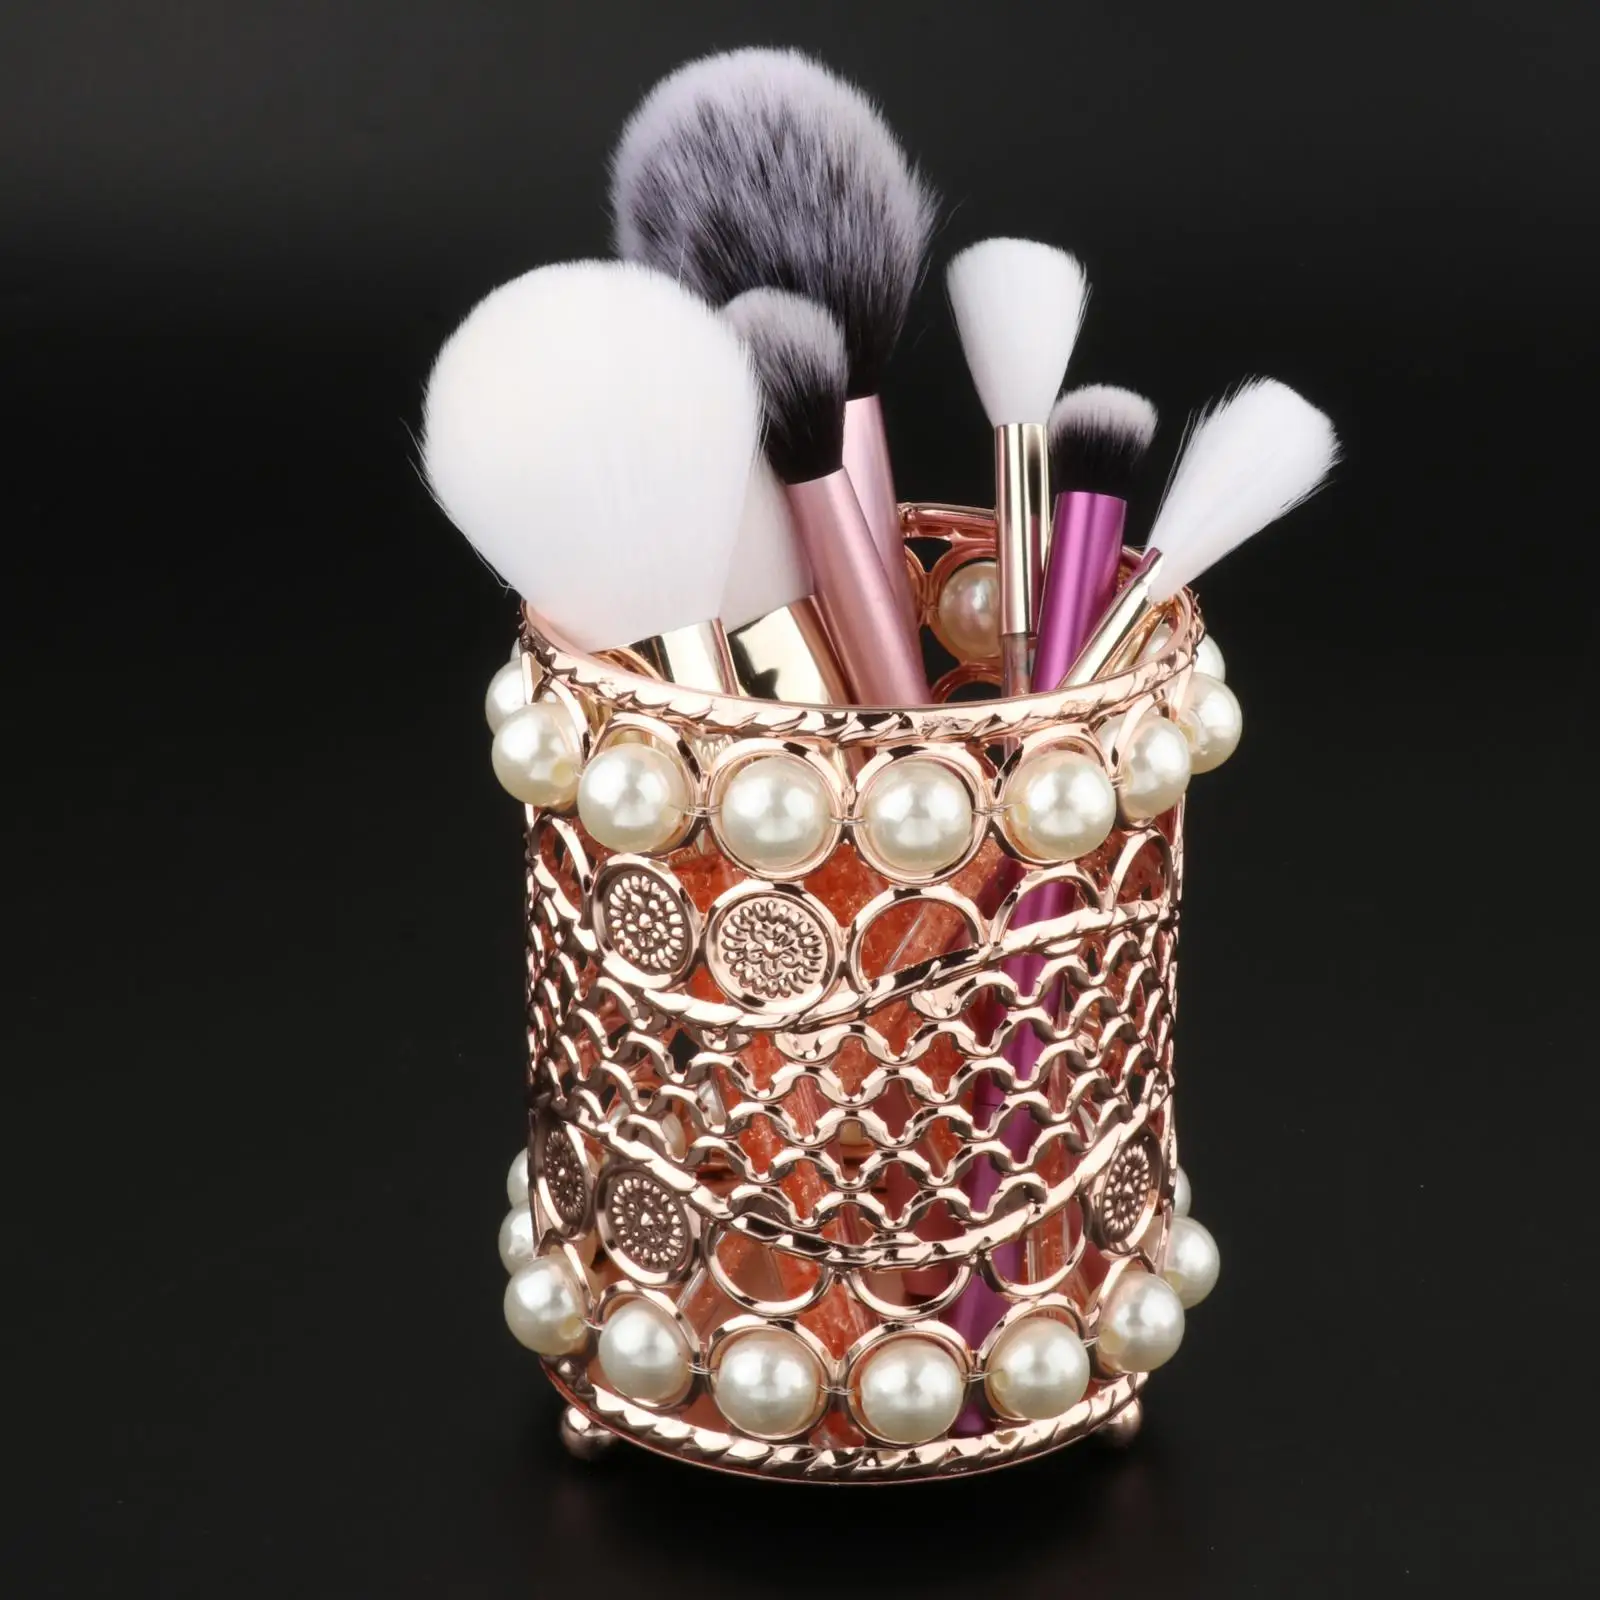 Crystal Cosmetic Organizer Makeup Brush Jewelry Storage Holder Pen Container Eyebrow Pencil Lipstick Holder Makeup Organizer